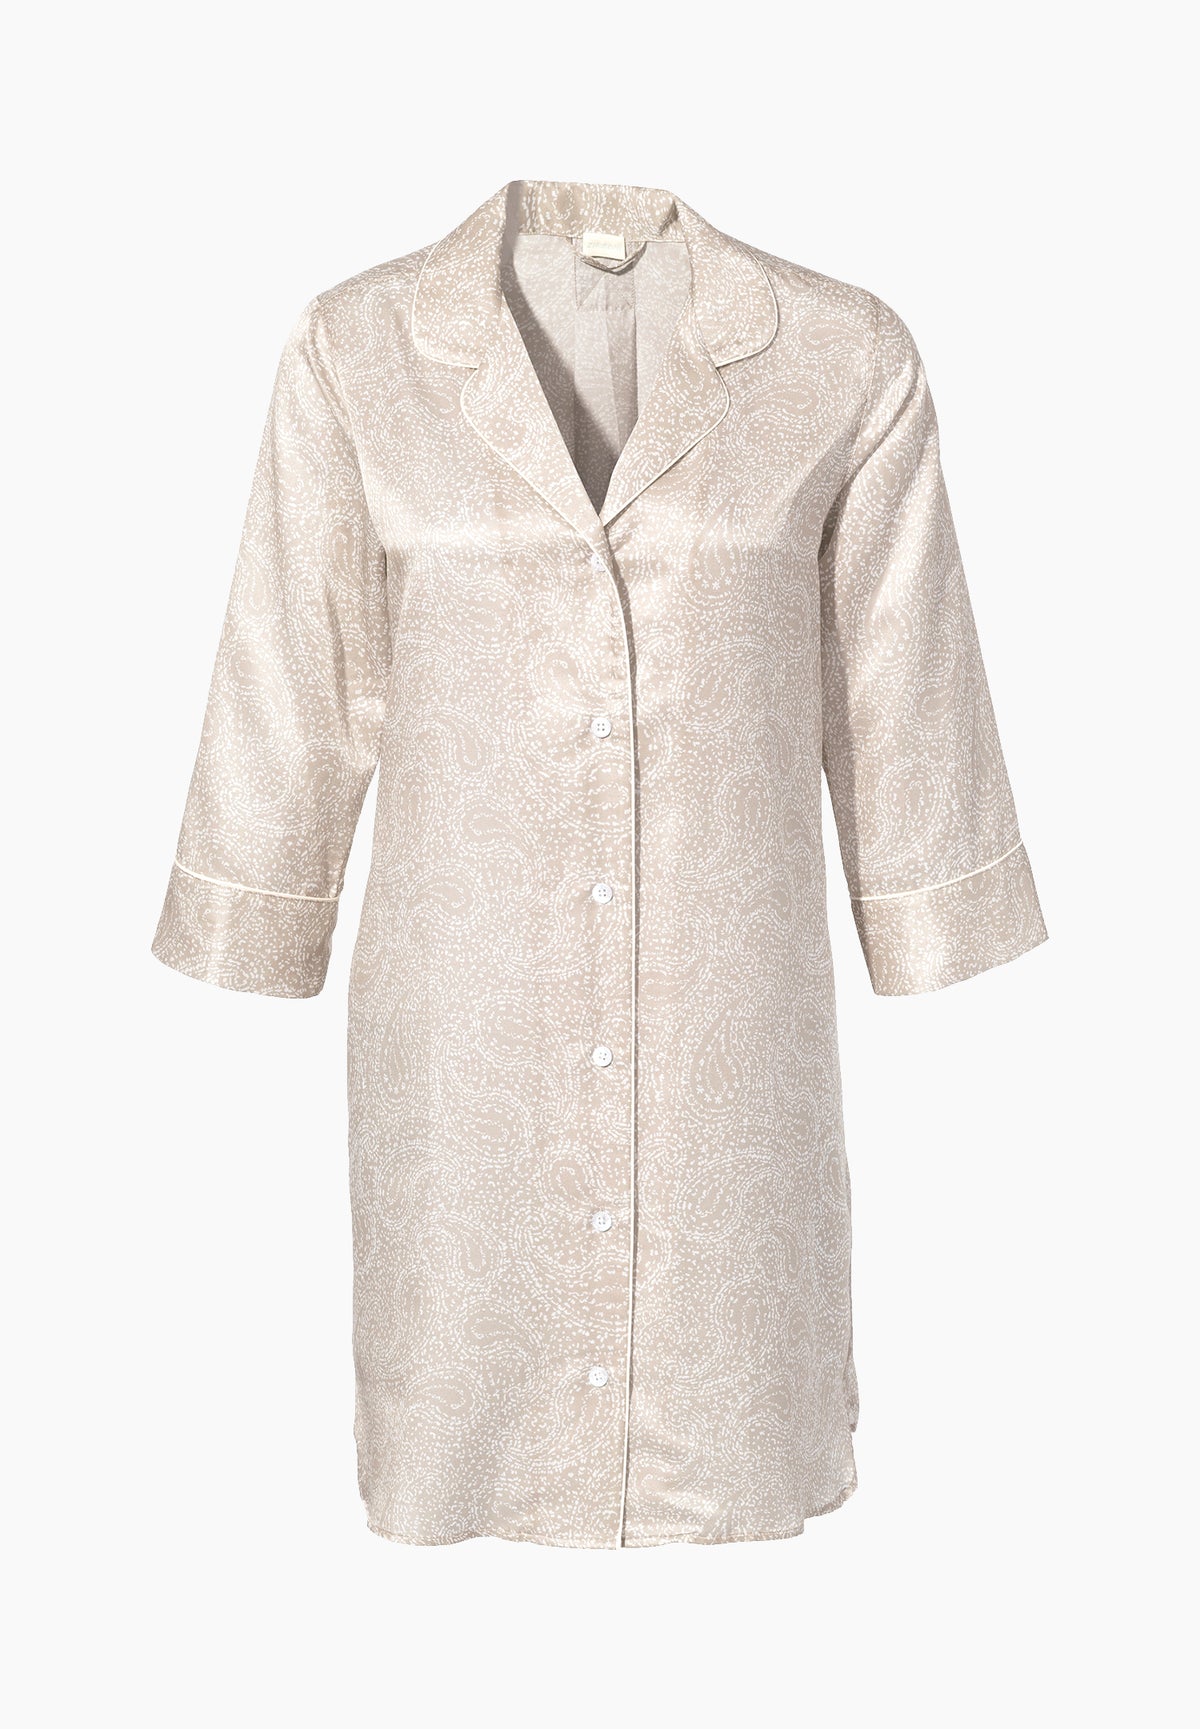 Cotton/Silk Print | Tee-shirt de nuit long manches 3/4 - paisley sand